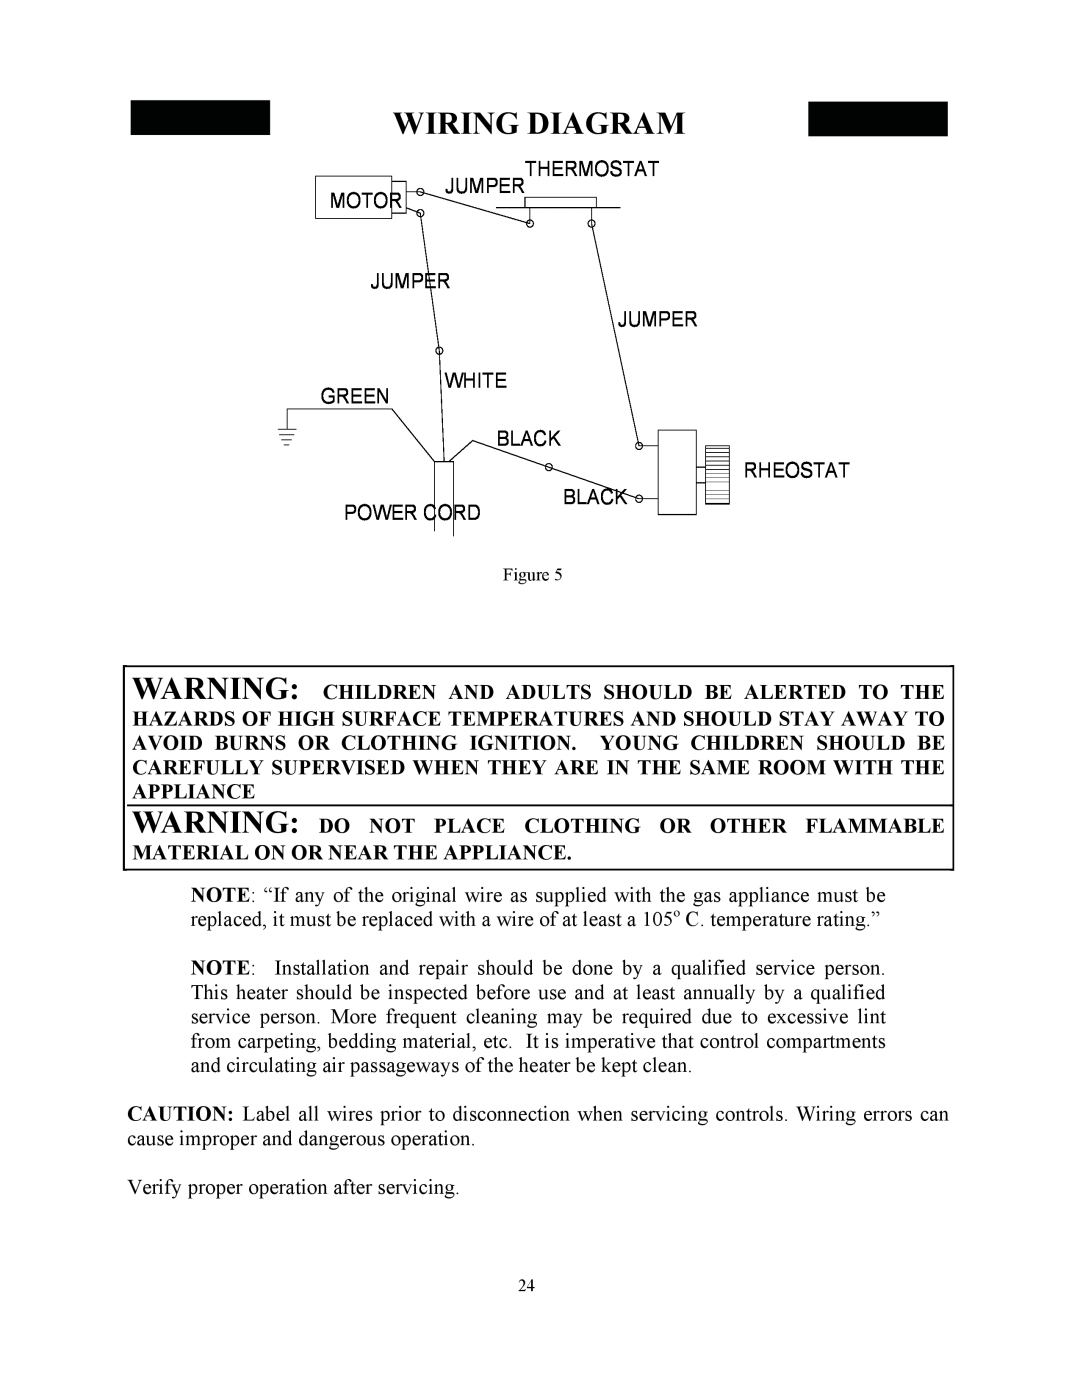 New Buck Corporation 34 manual Wiring Diagram 